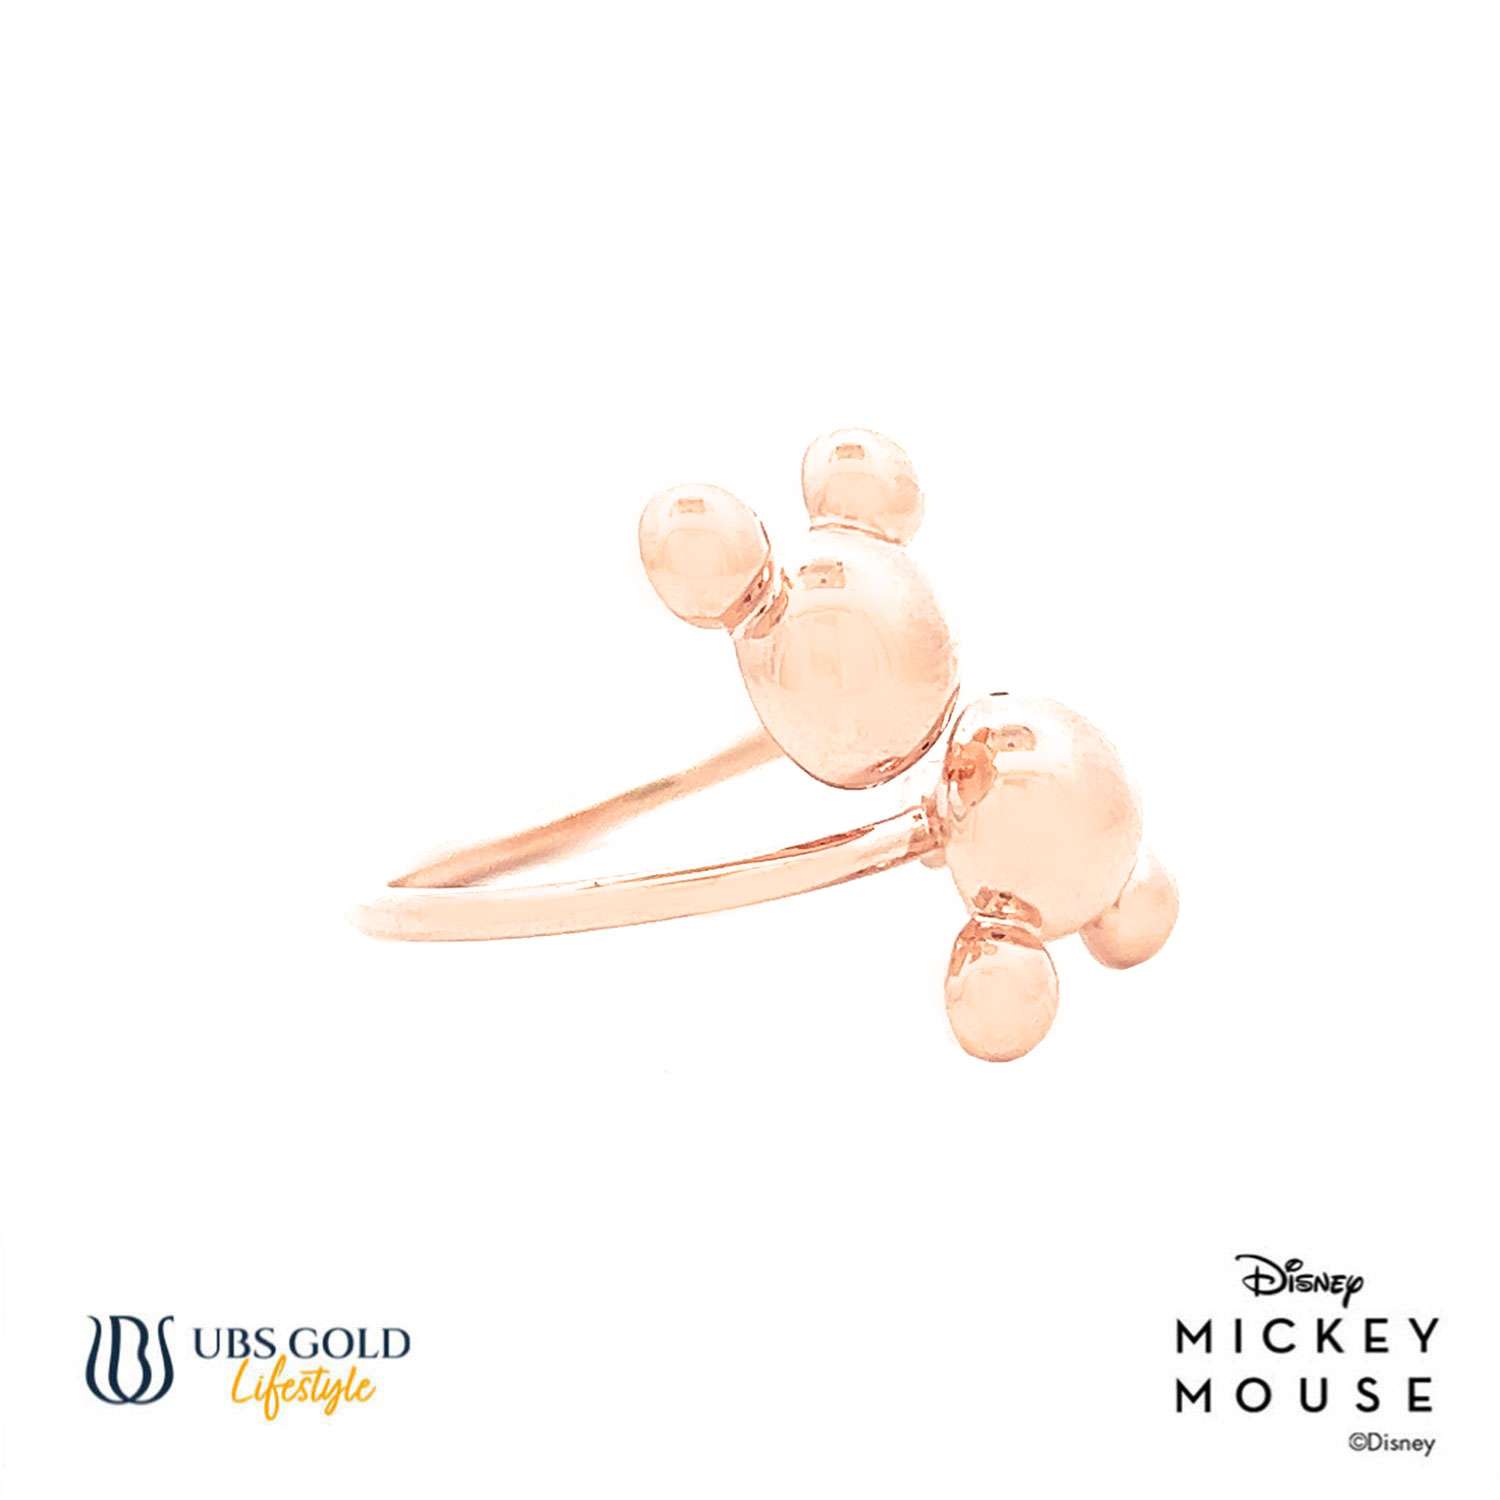 UBS Gold Cincin Emas Disney Mickey Mouse - Acy0020 - 17K